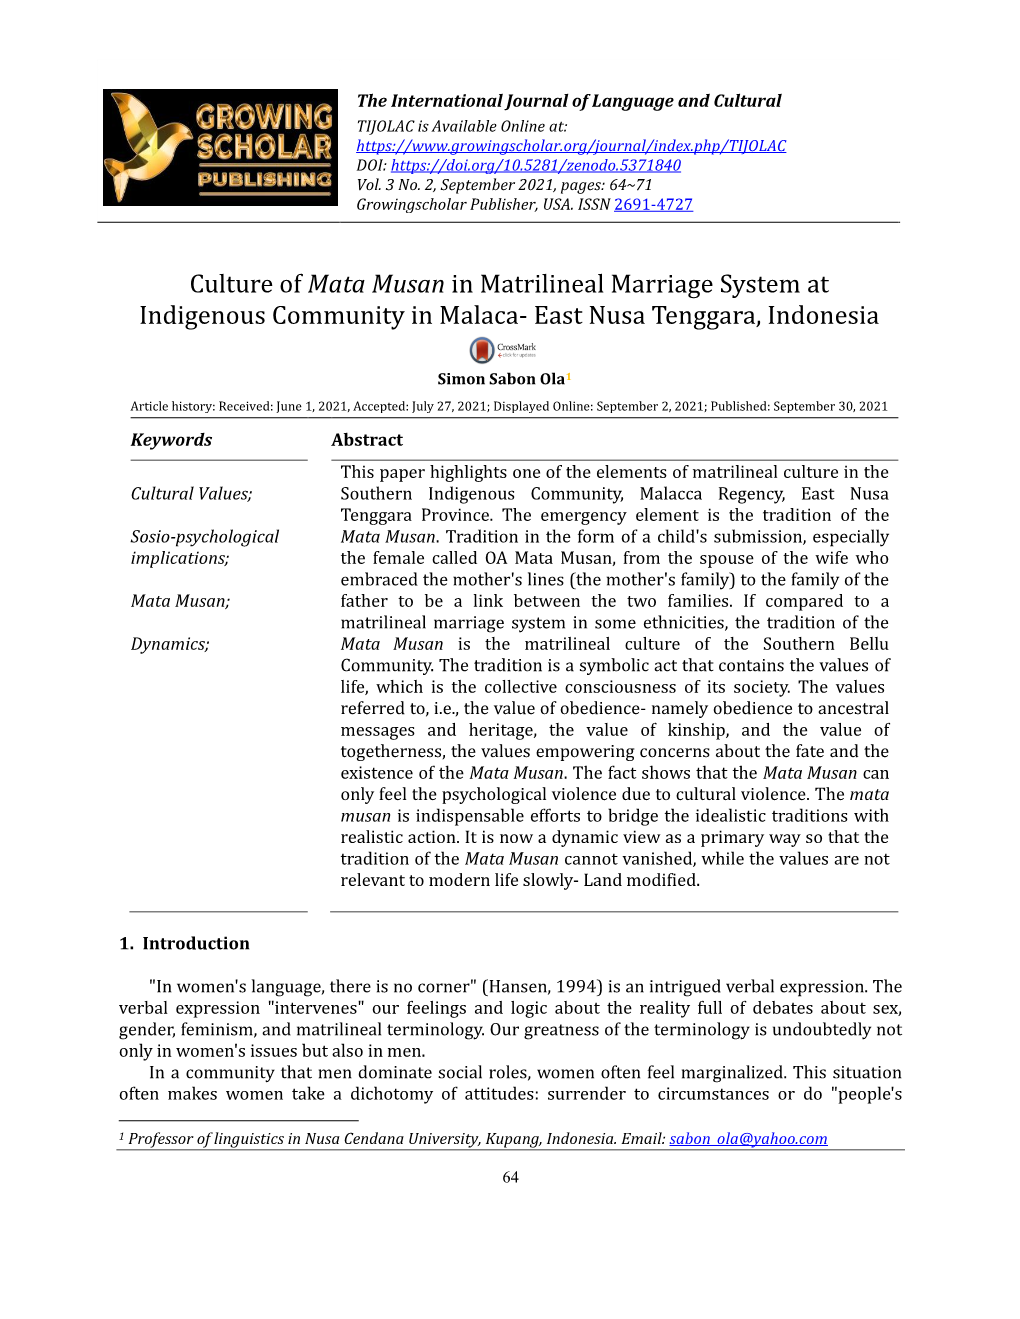 Culture of Mata Musan in Matrilineal Marriage System at Indigenous Community in Malaca- East Nusa Tenggara, Indonesia